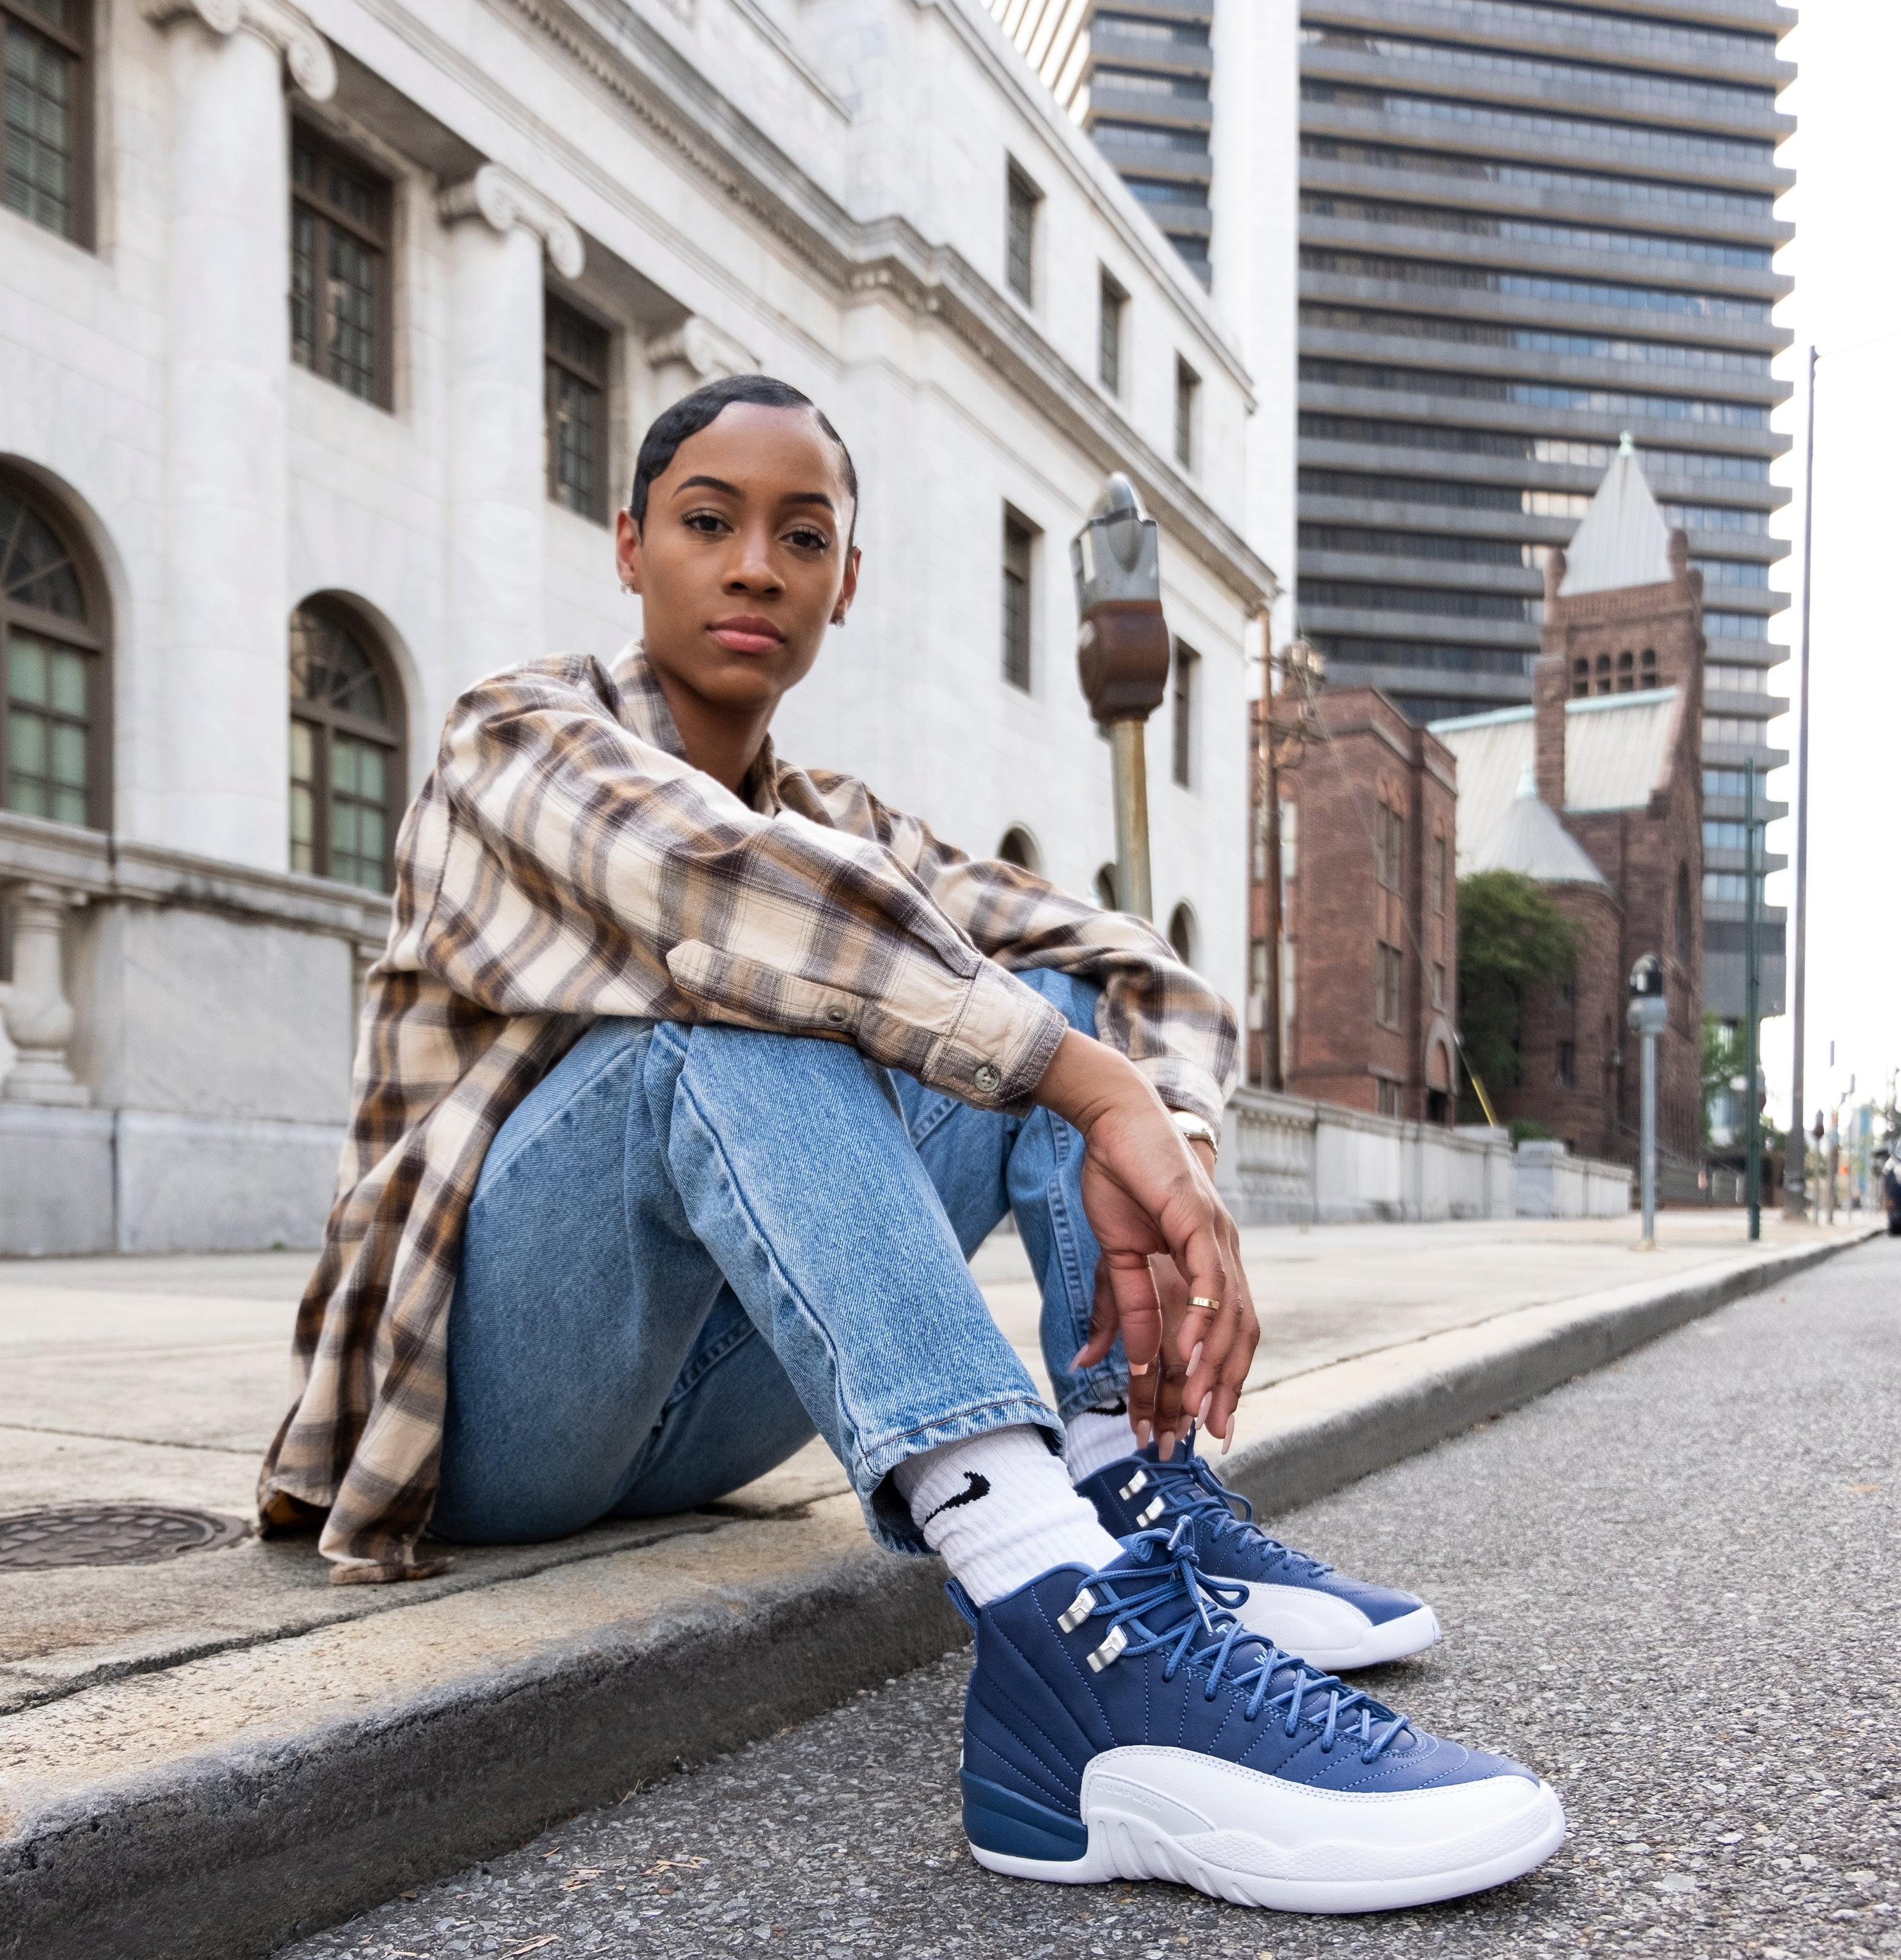 Nike Air Jordan 12 Retro Women's Basketball Shoes Size 9.5